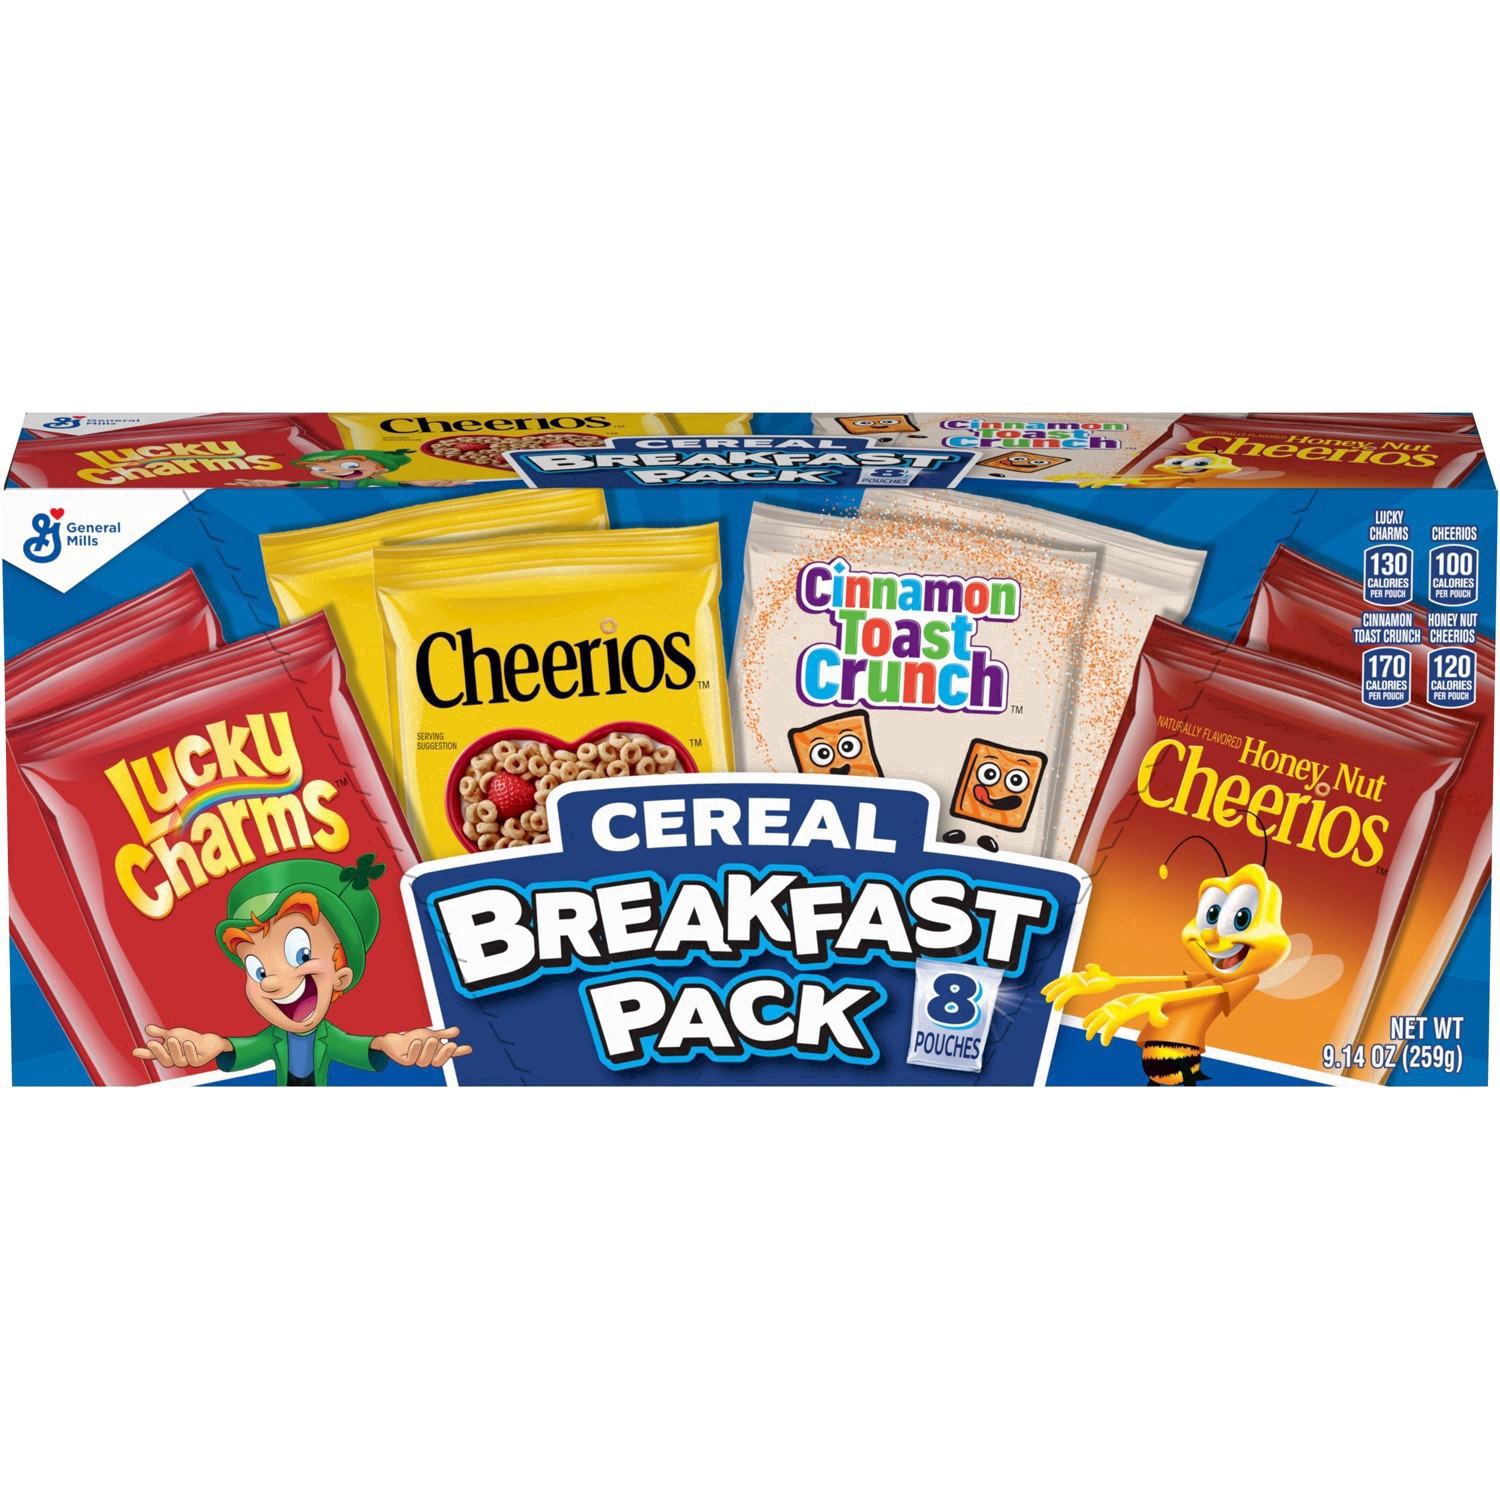 slide 47 of 141, General Mills Breakfast Pack Cereal, 8 ct